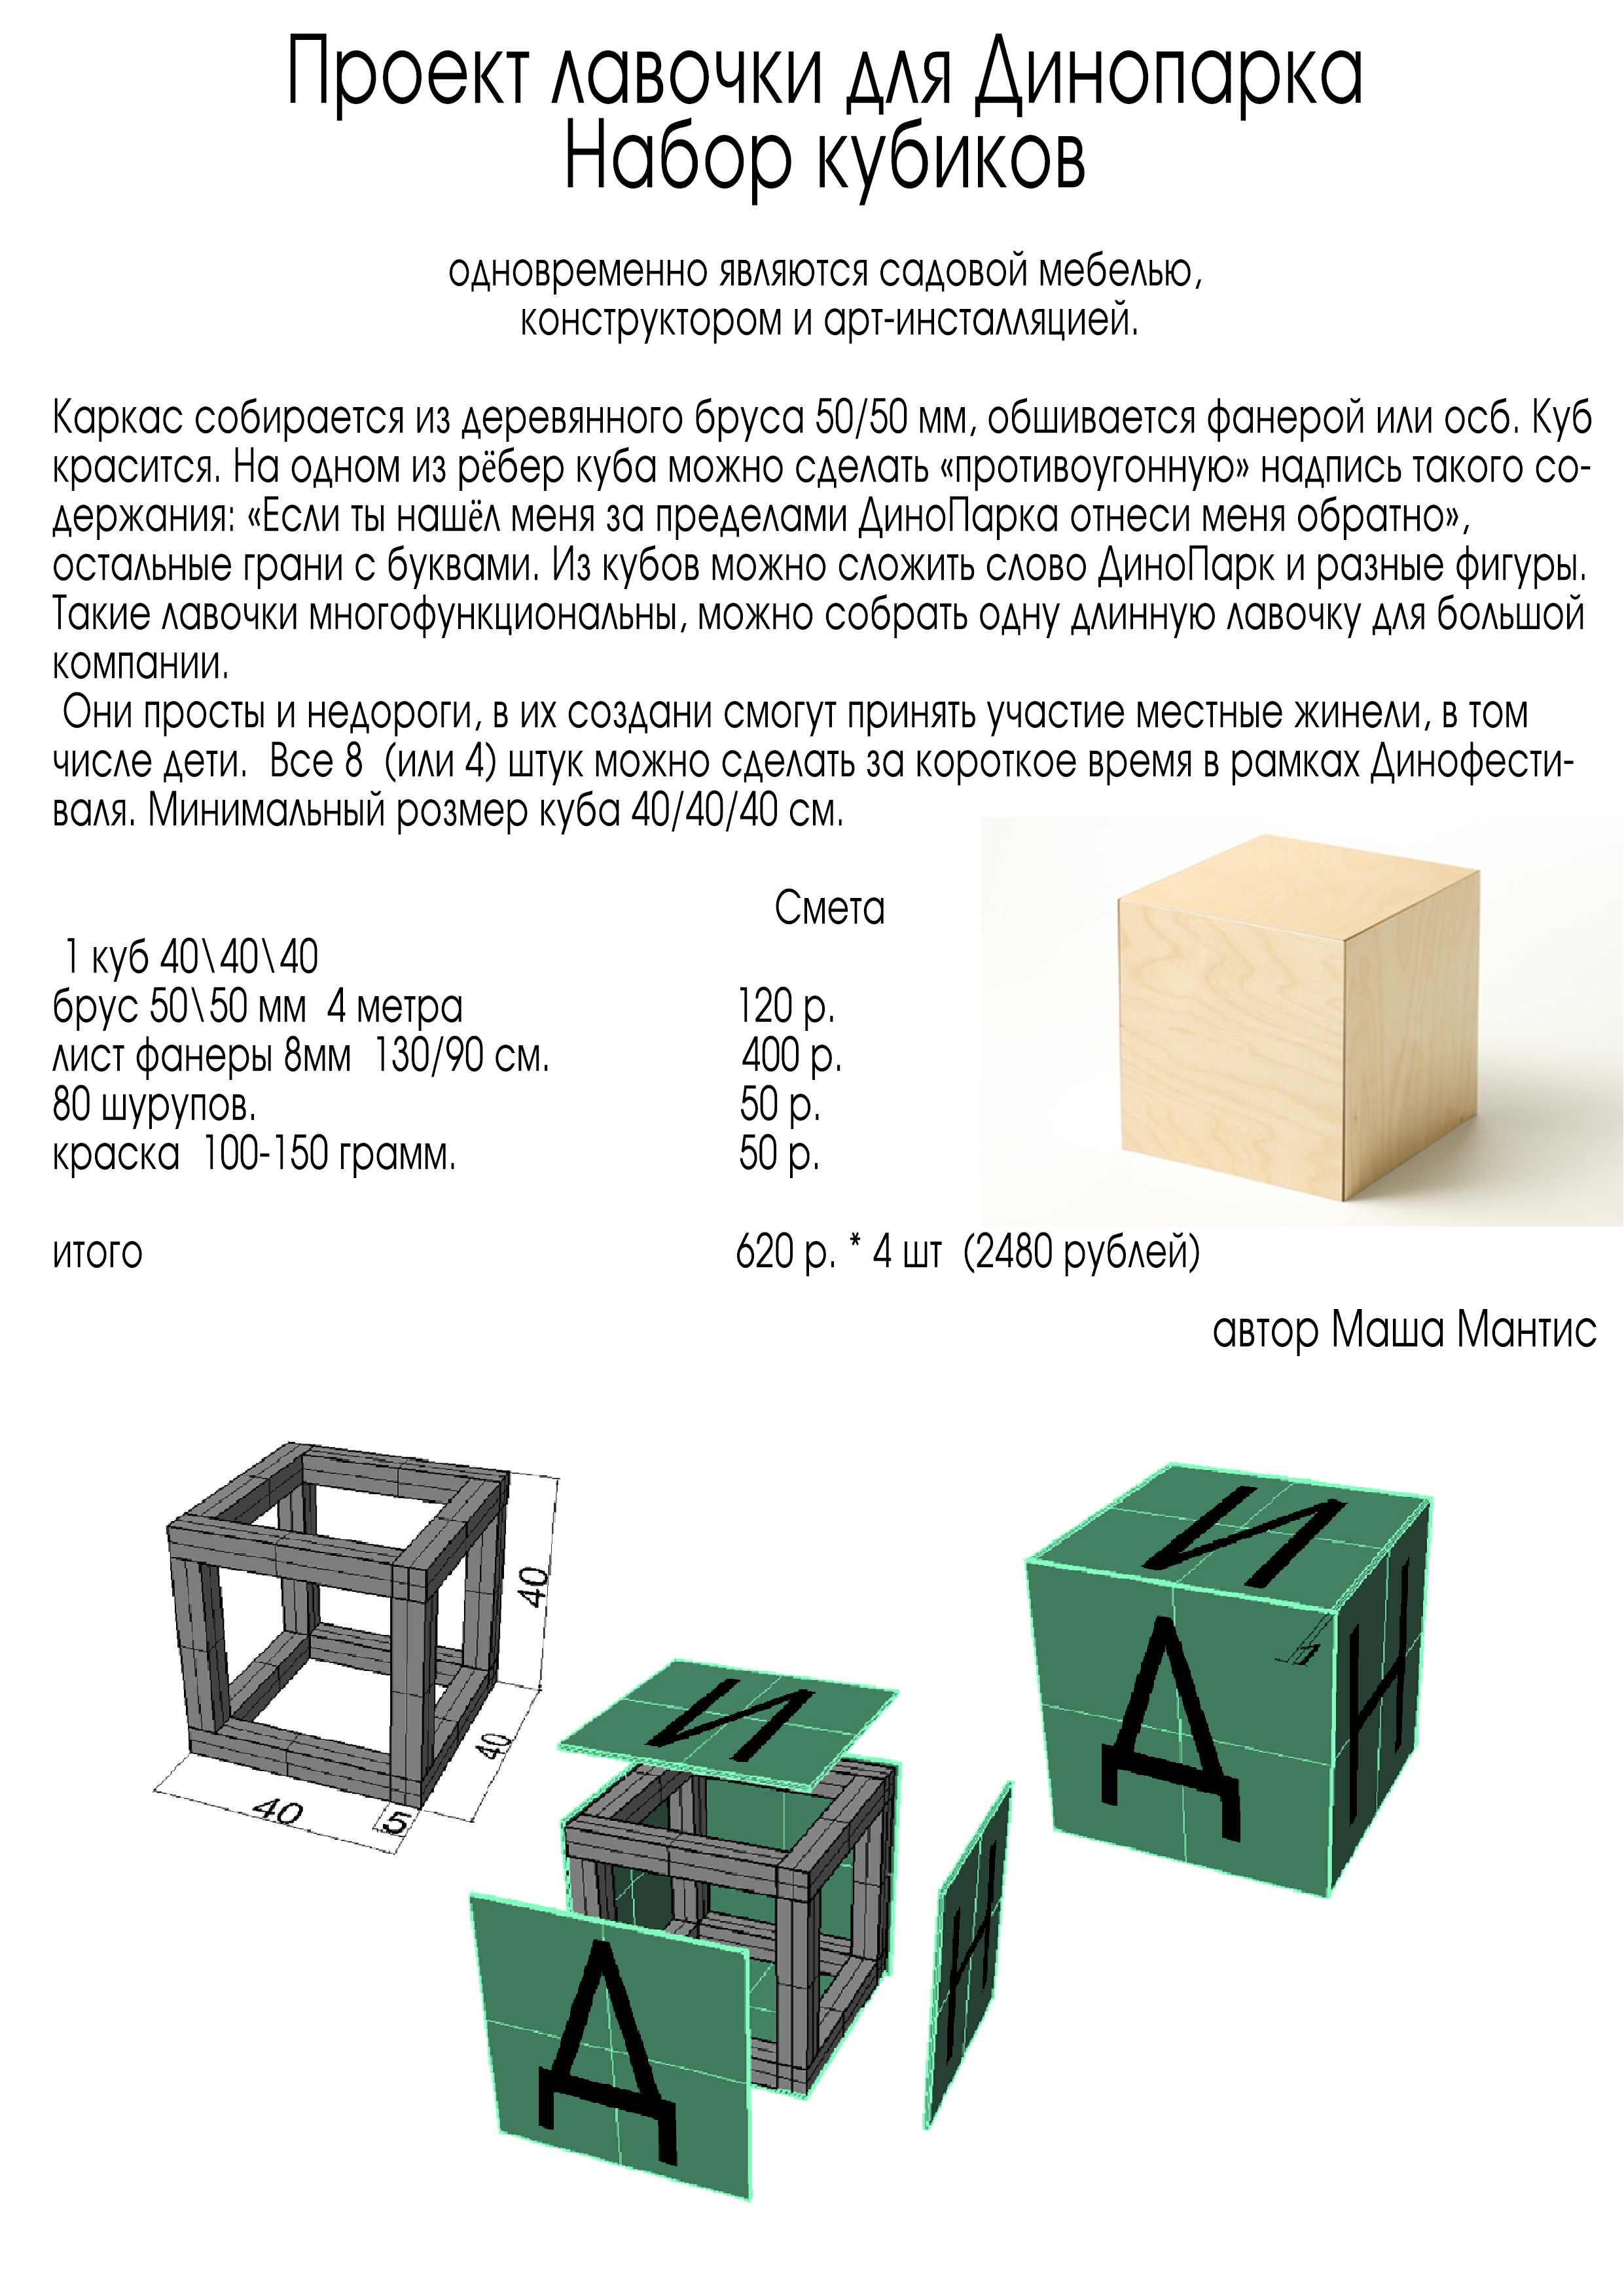 про кубики из Динопарка. дизайн-эксперимент #севпарки